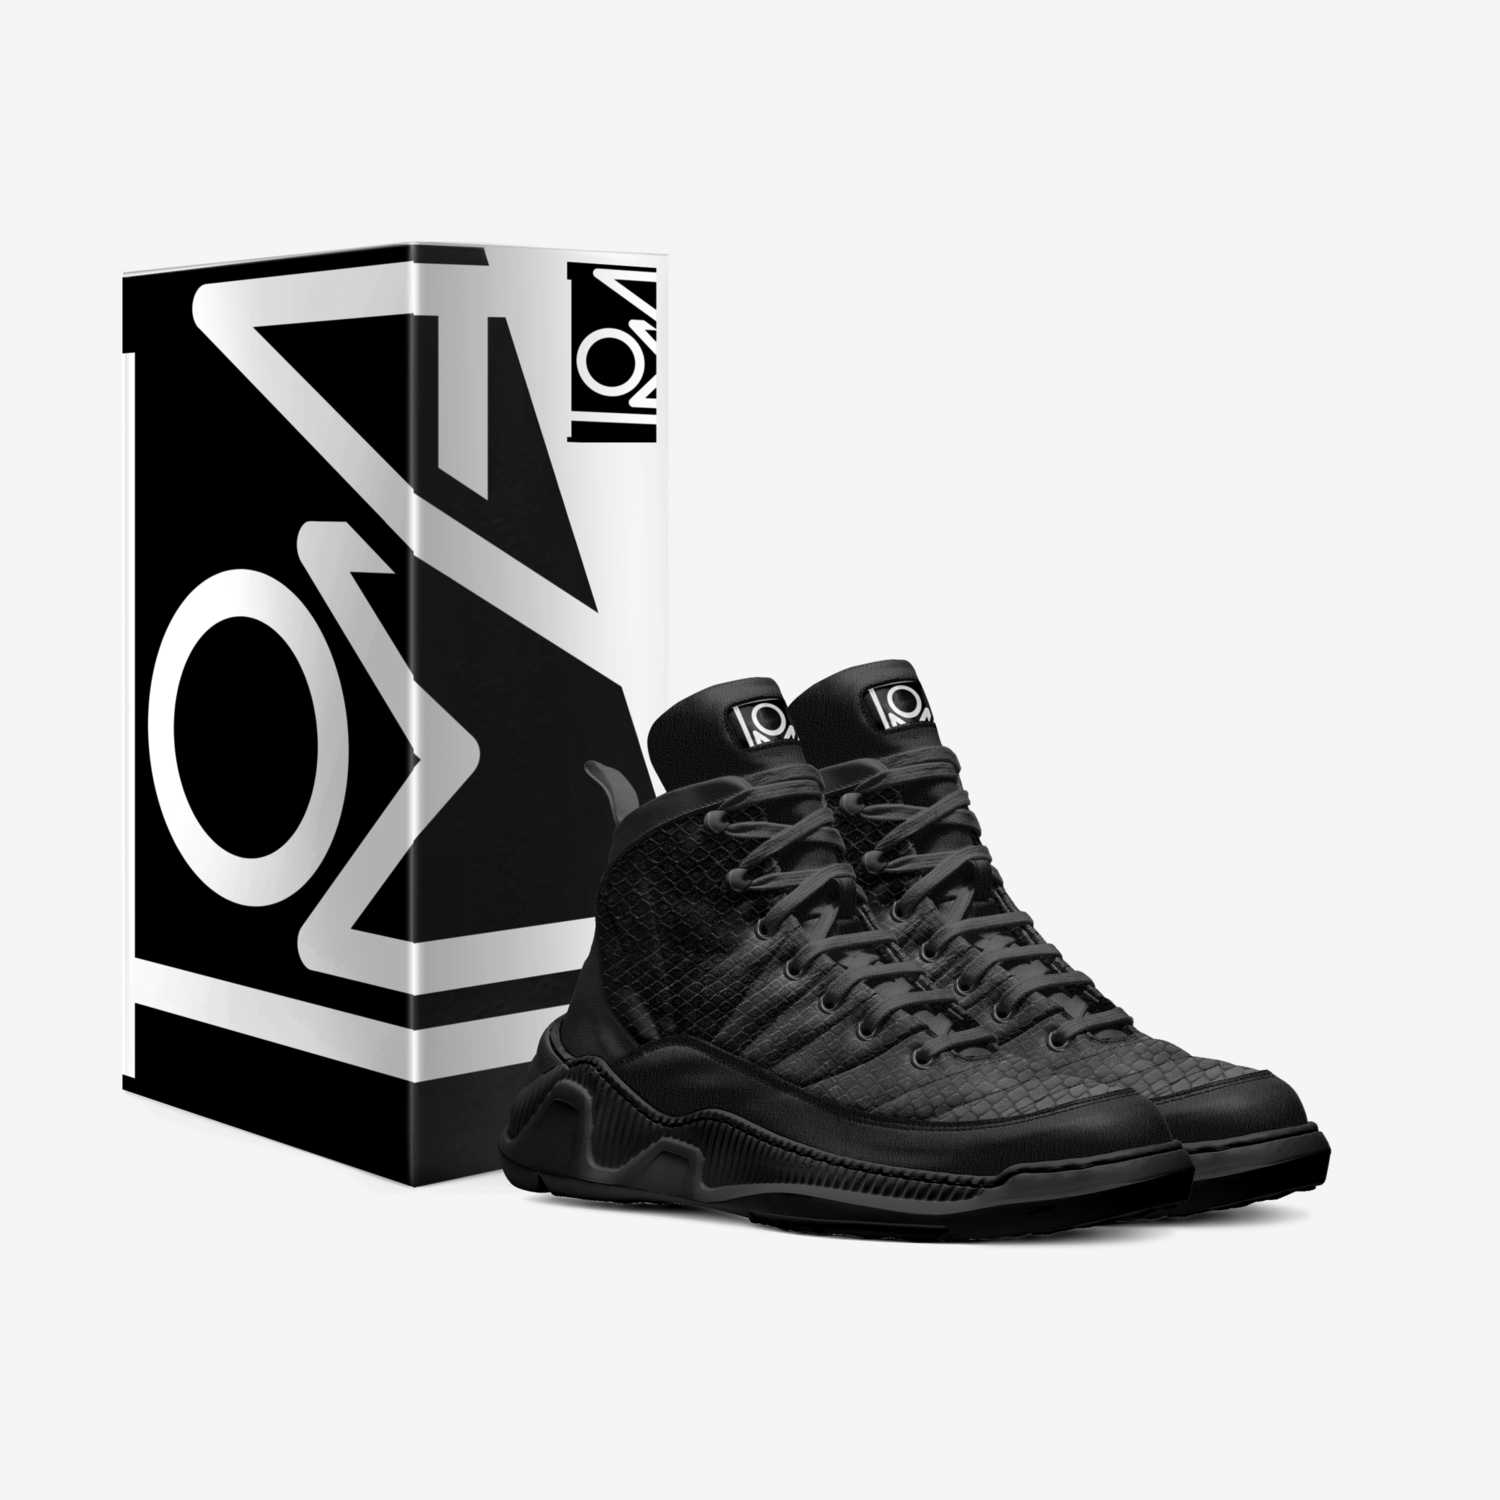 TOMA Yuno custom made in Italy shoes by Rhashad Thomas | Box view